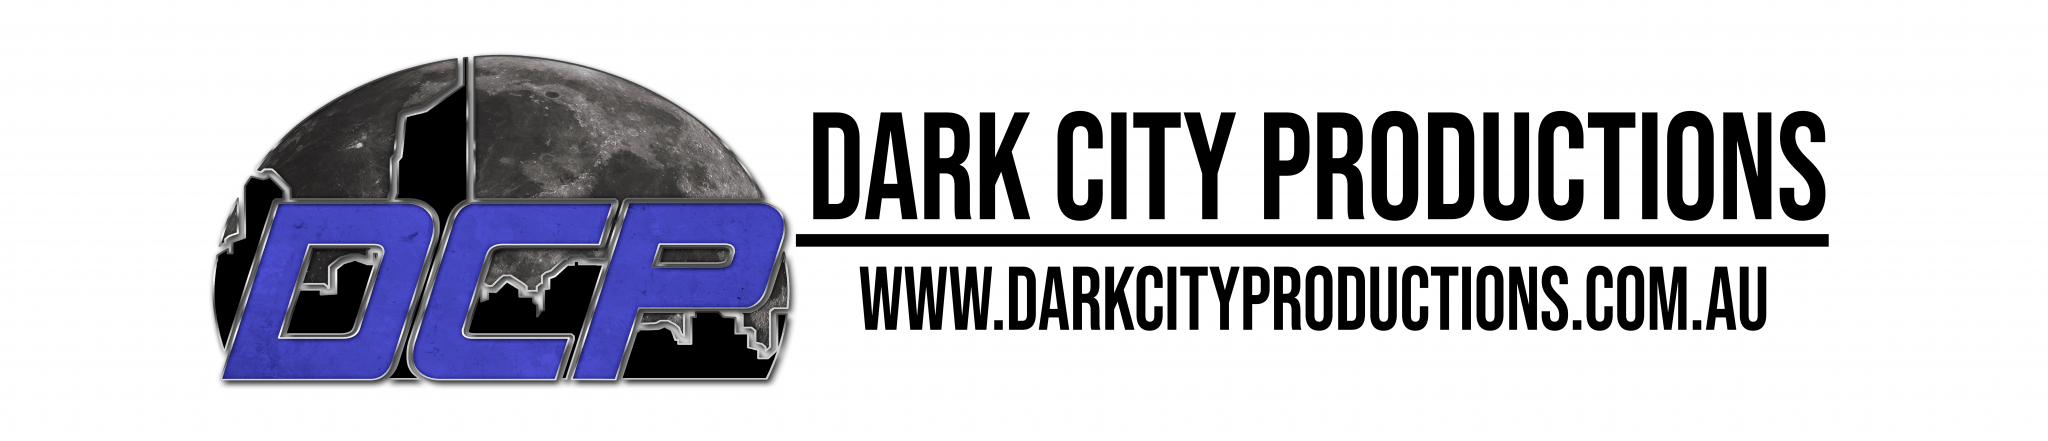 Dark City Productions